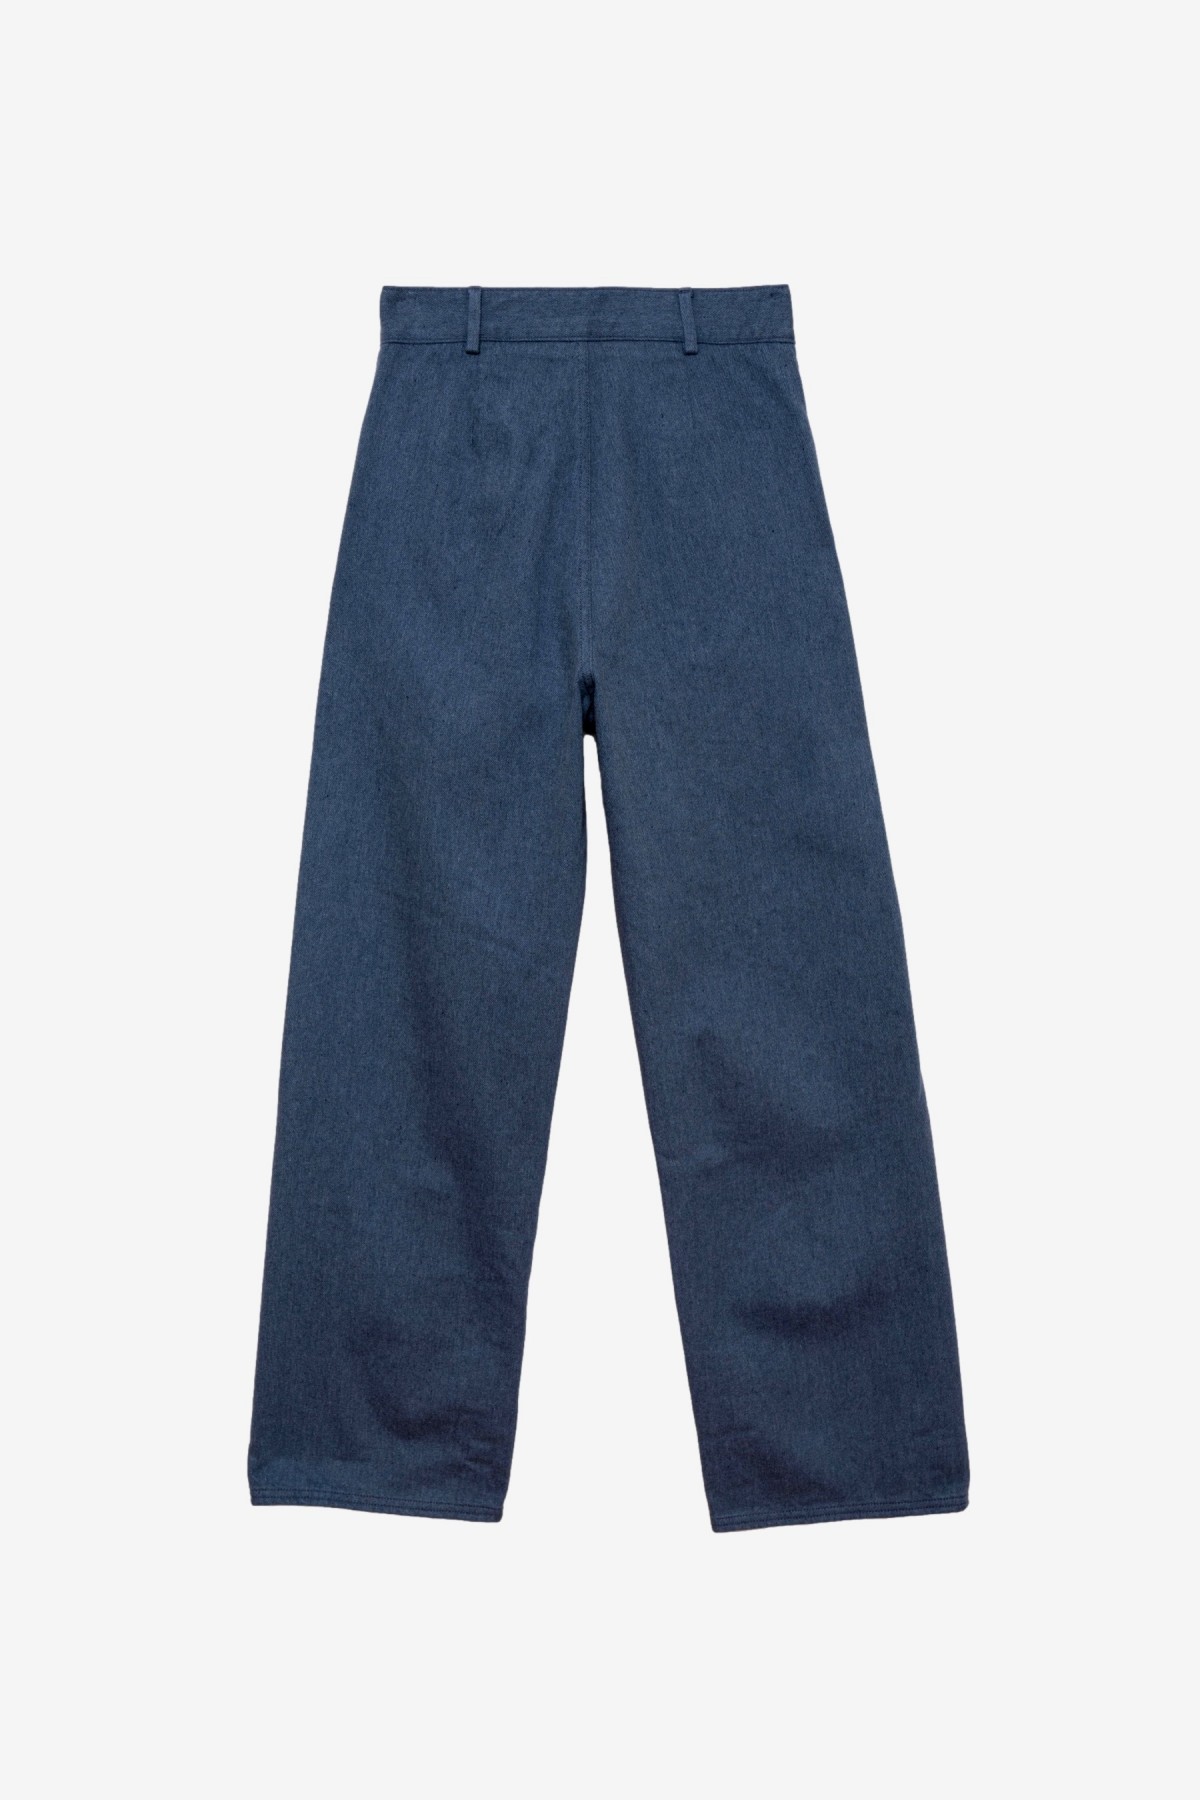 Baserange Navalo Pants in Grey/Blue